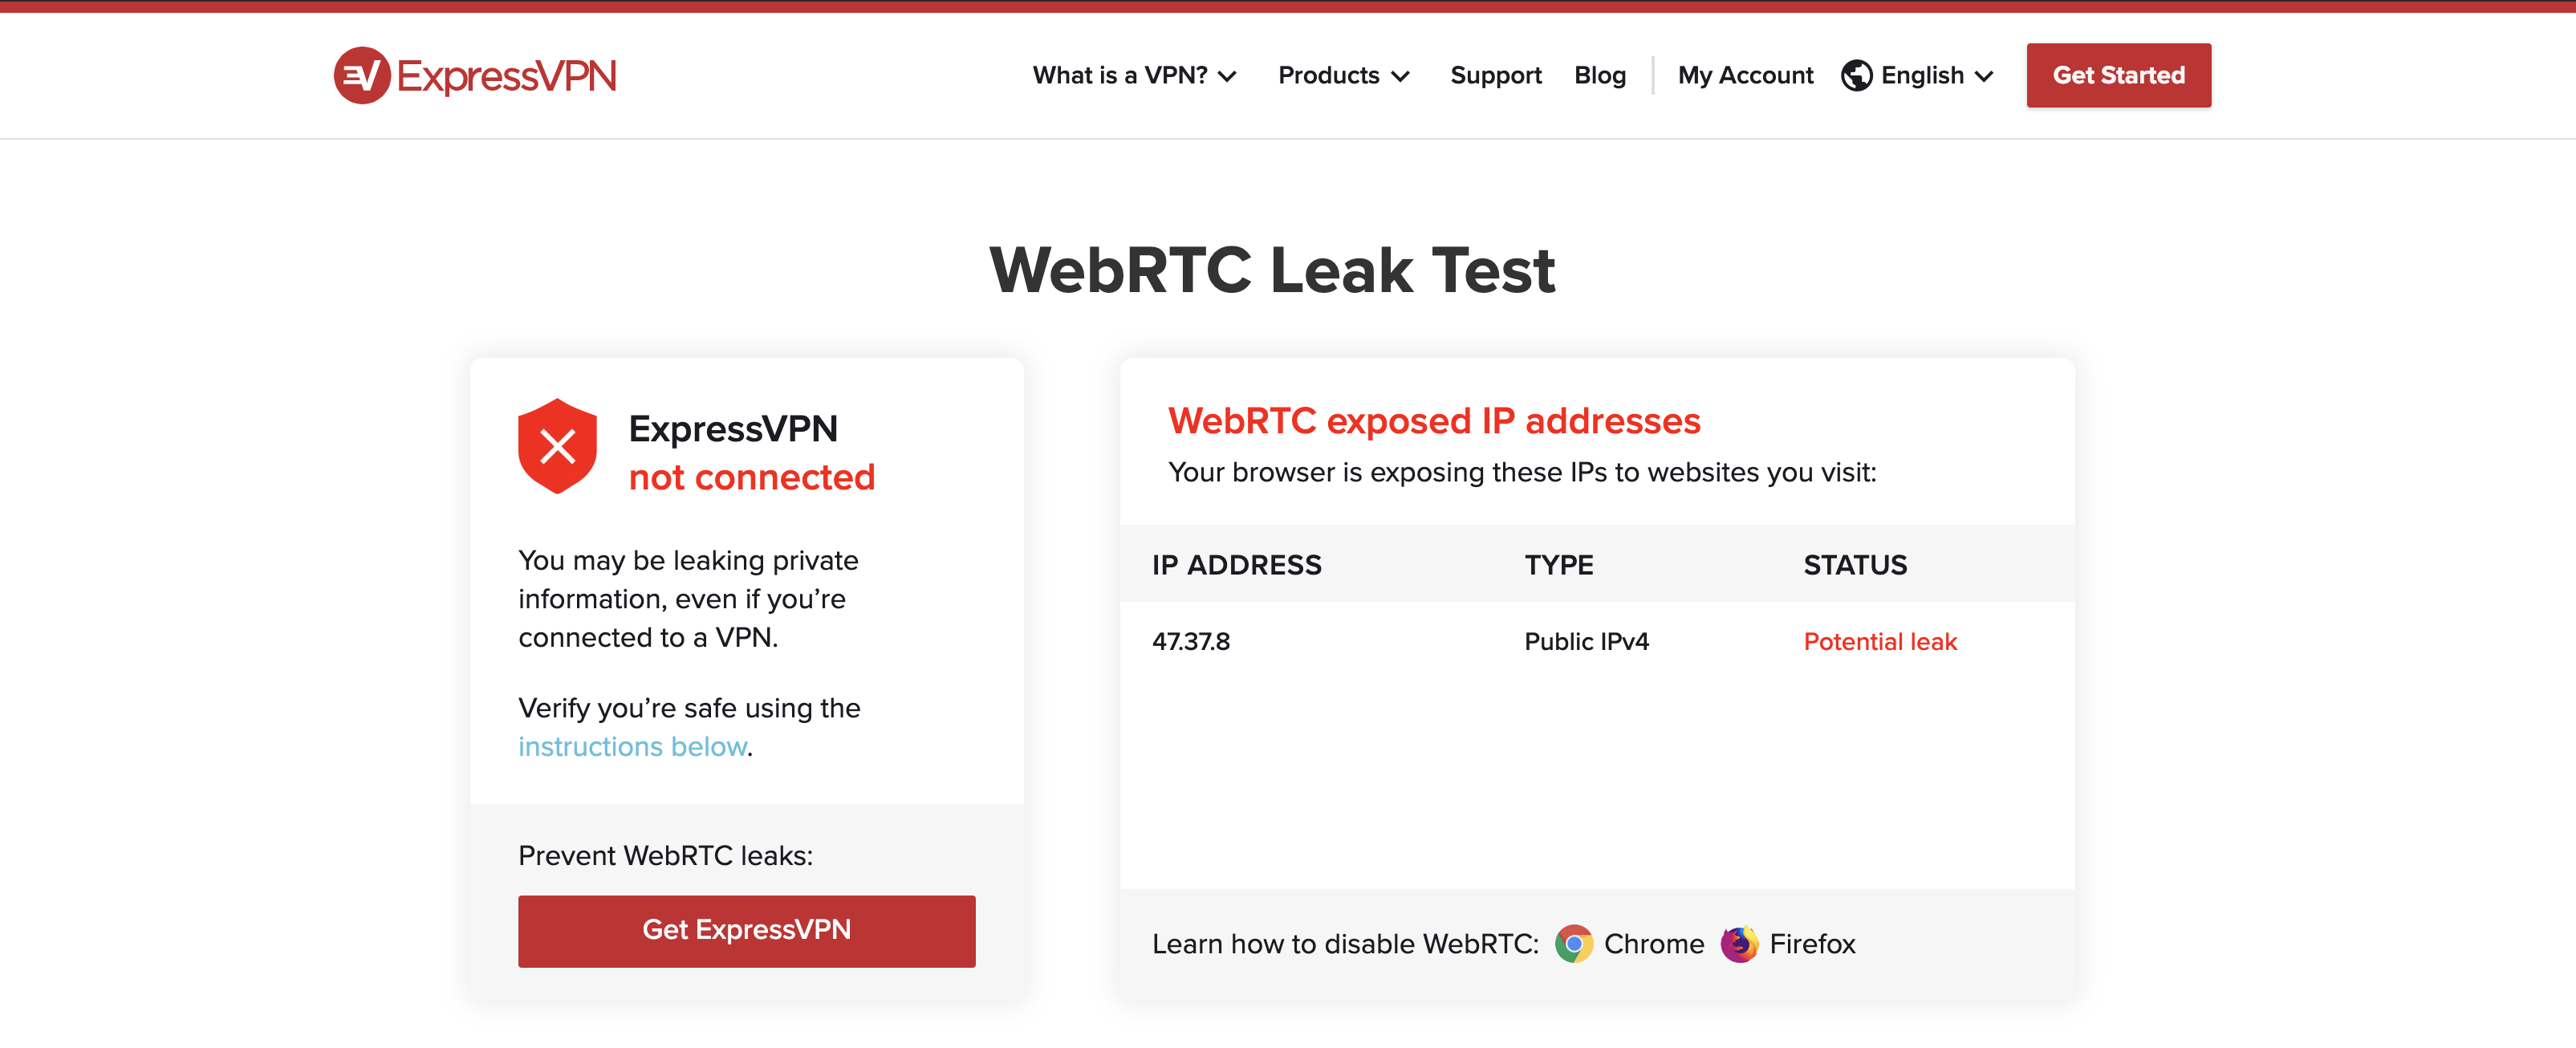 WebRTC Leak Test Without the VPN Running